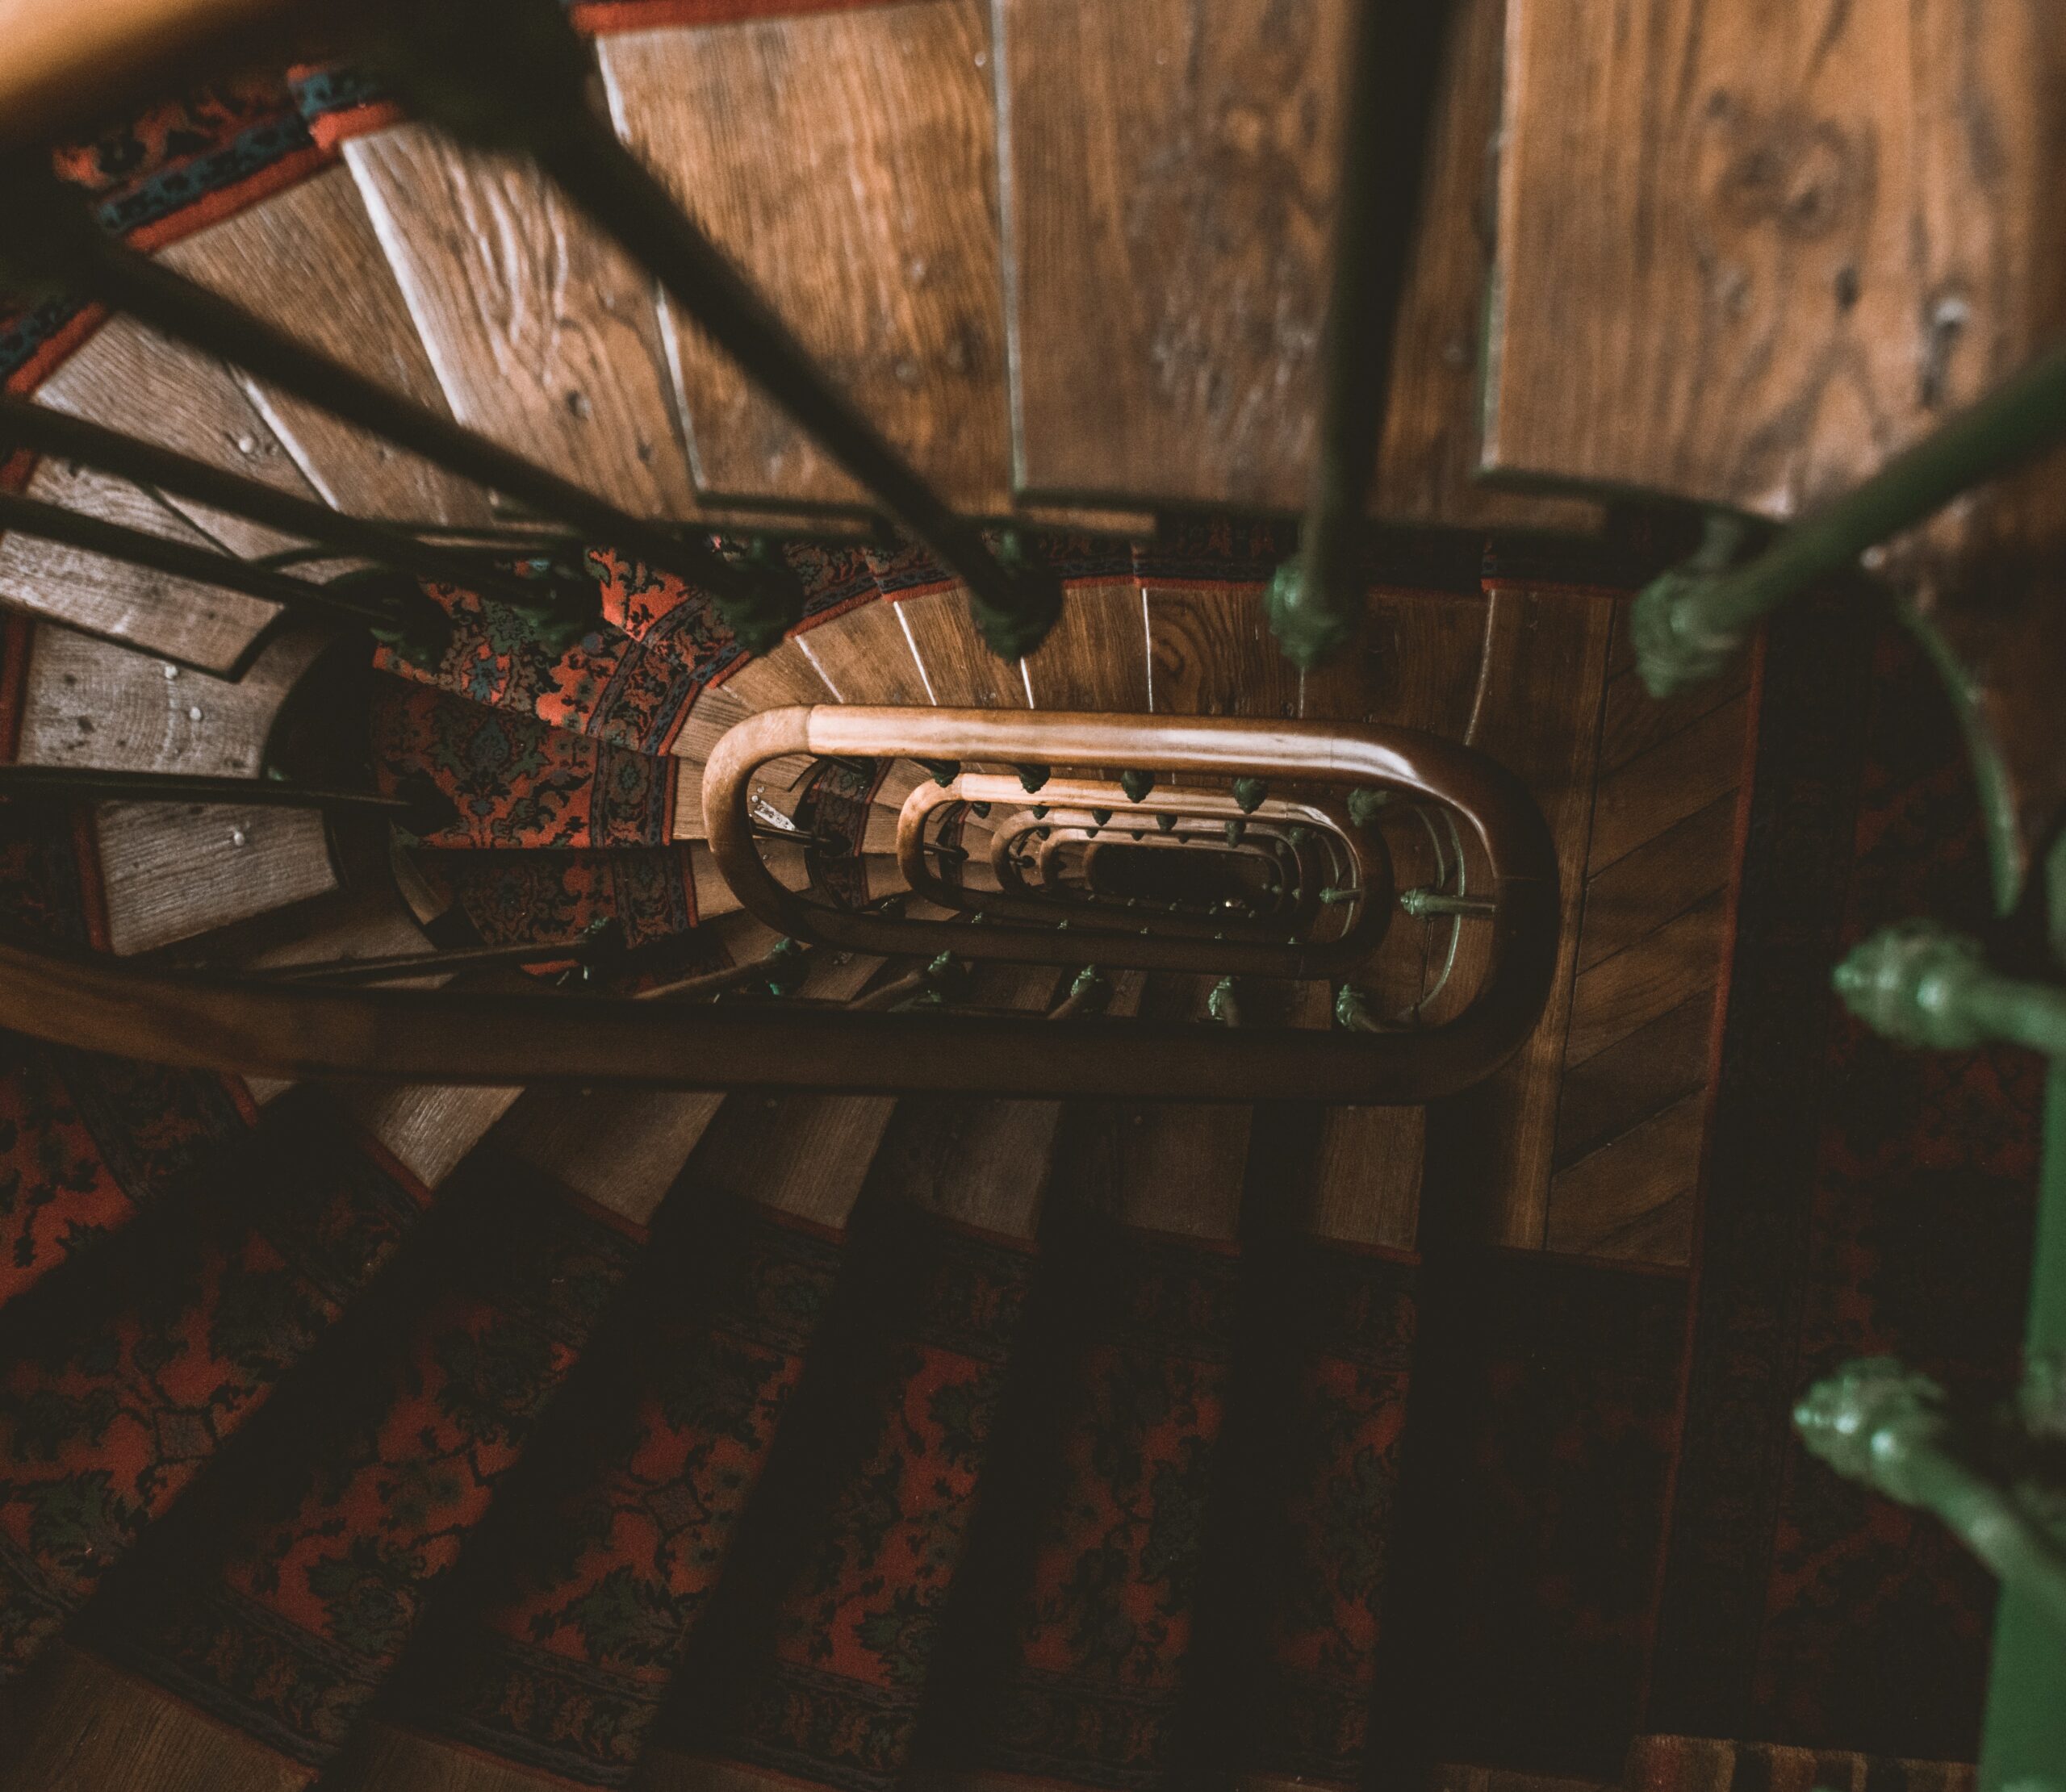 Winding stairs - Photo by Sean Mungur on Unsplash